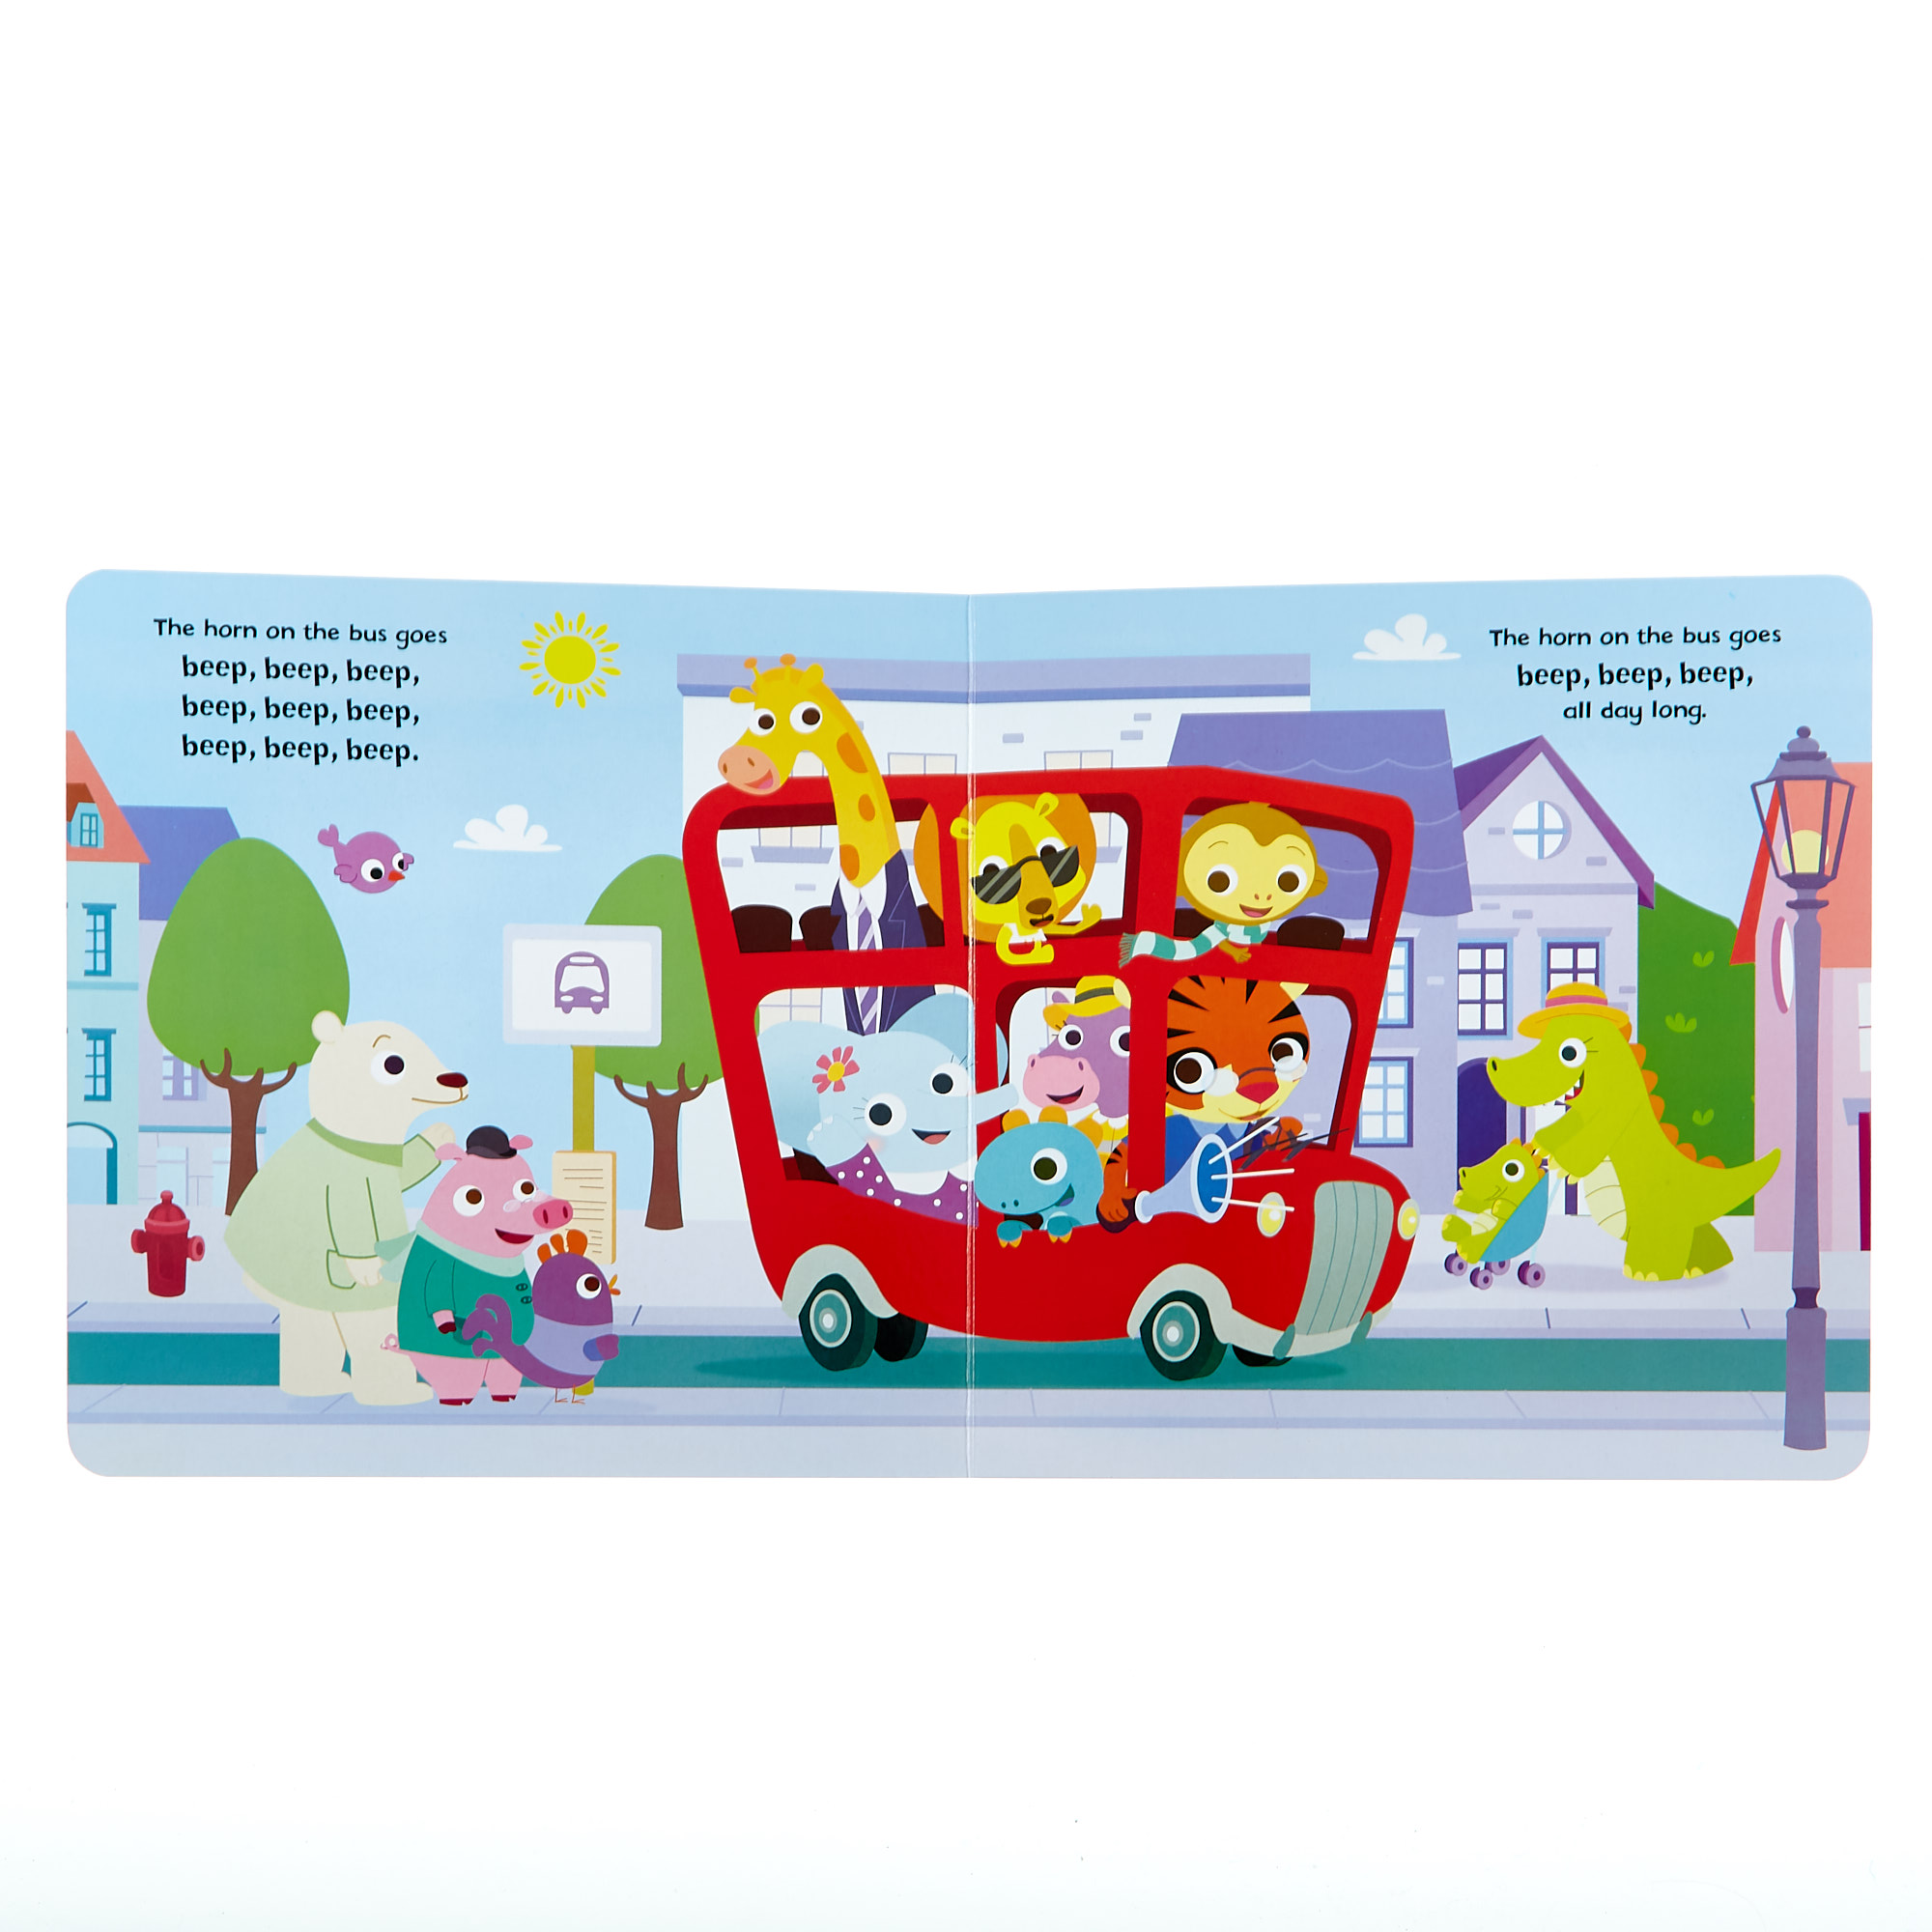 The Wheels On The Bus Fun Time Board Book